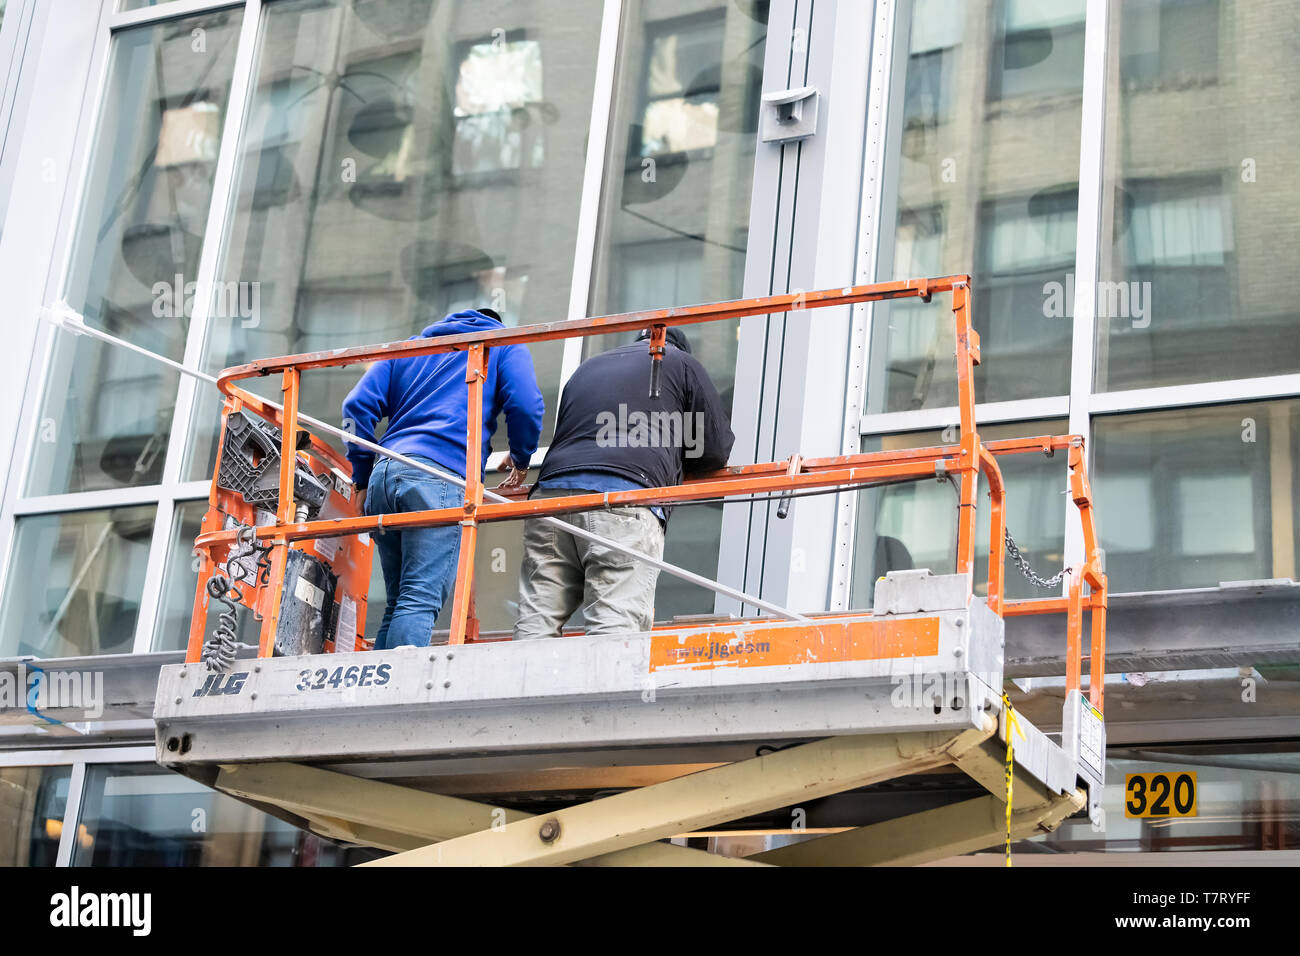 Window Washing Rigs - NYC Scaffolding Contractor